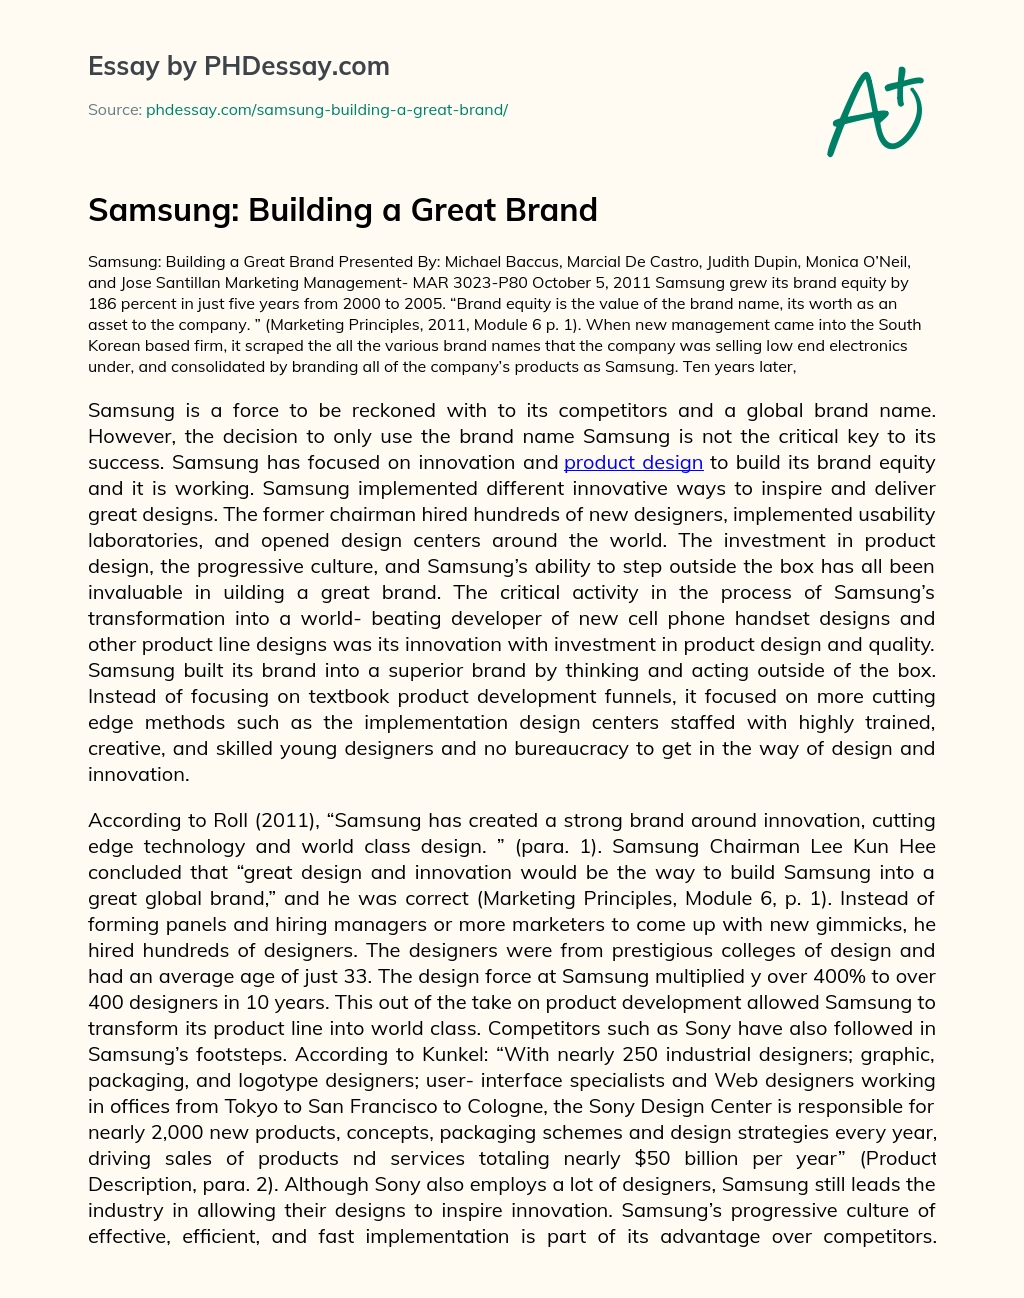 Samsung: Building a Great Brand essay